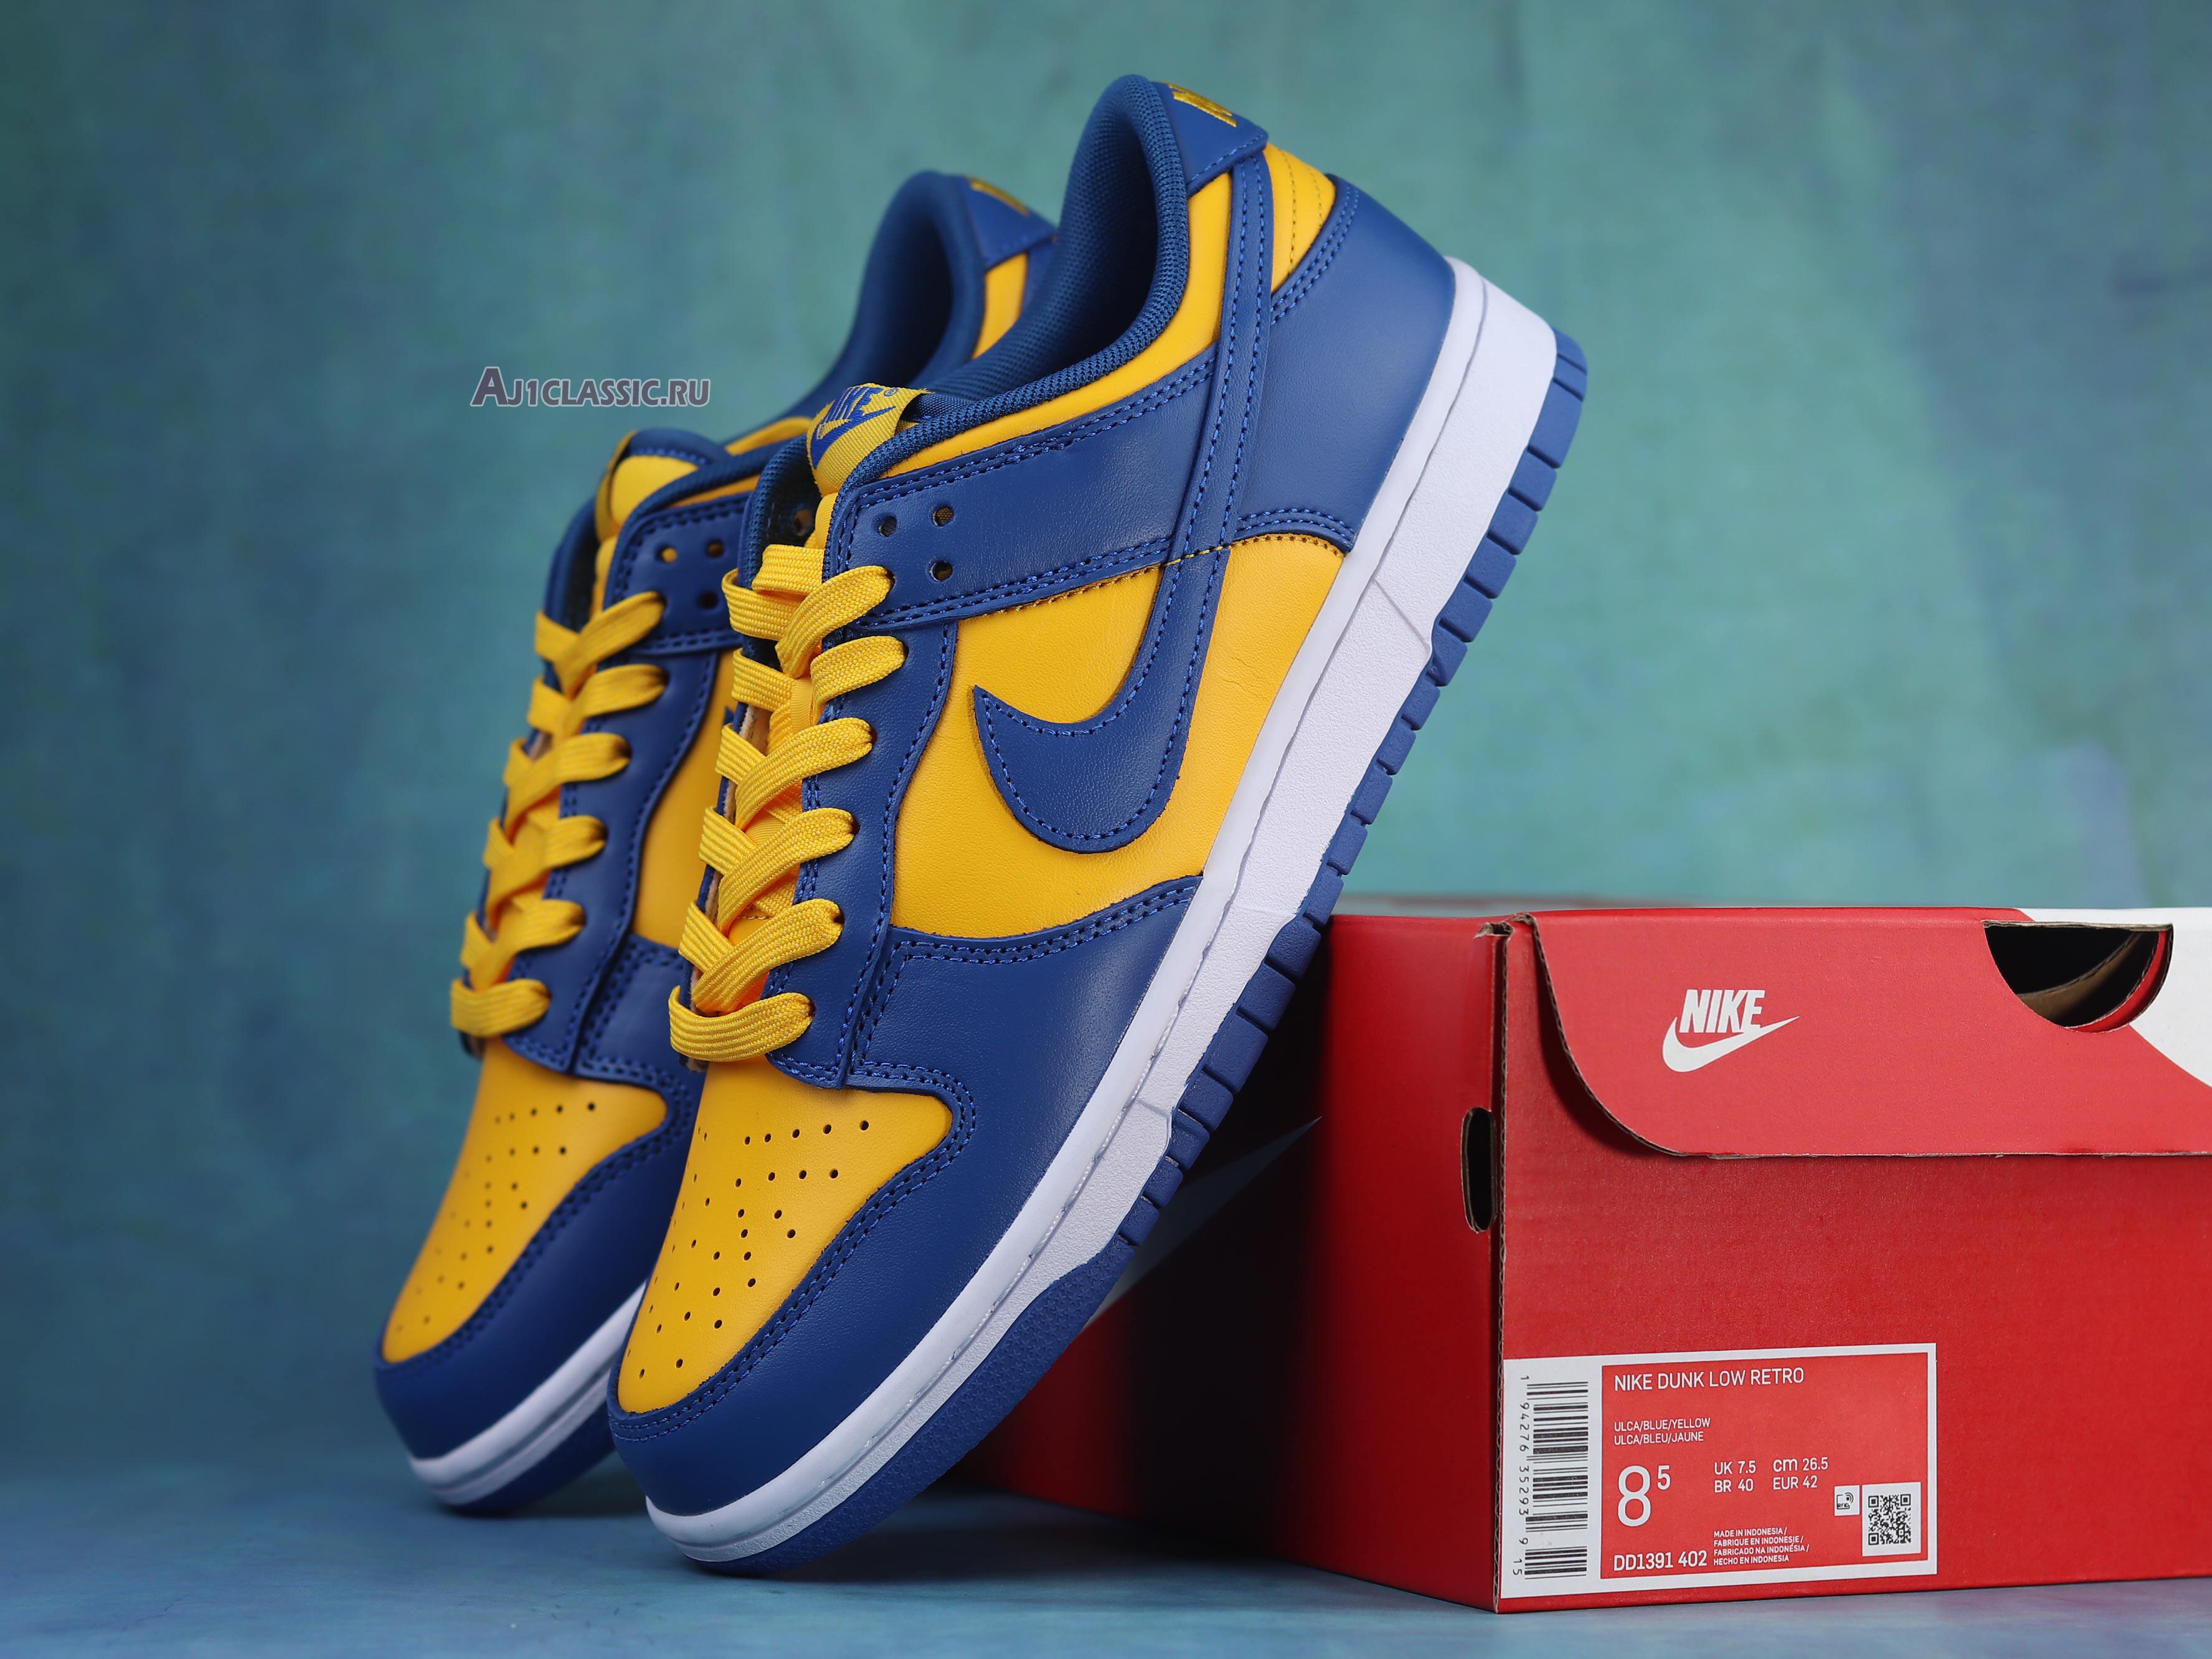 Nike Dunk Low UCLA DD1391-402-02 Blue Jay/University Gold-White Sneakers